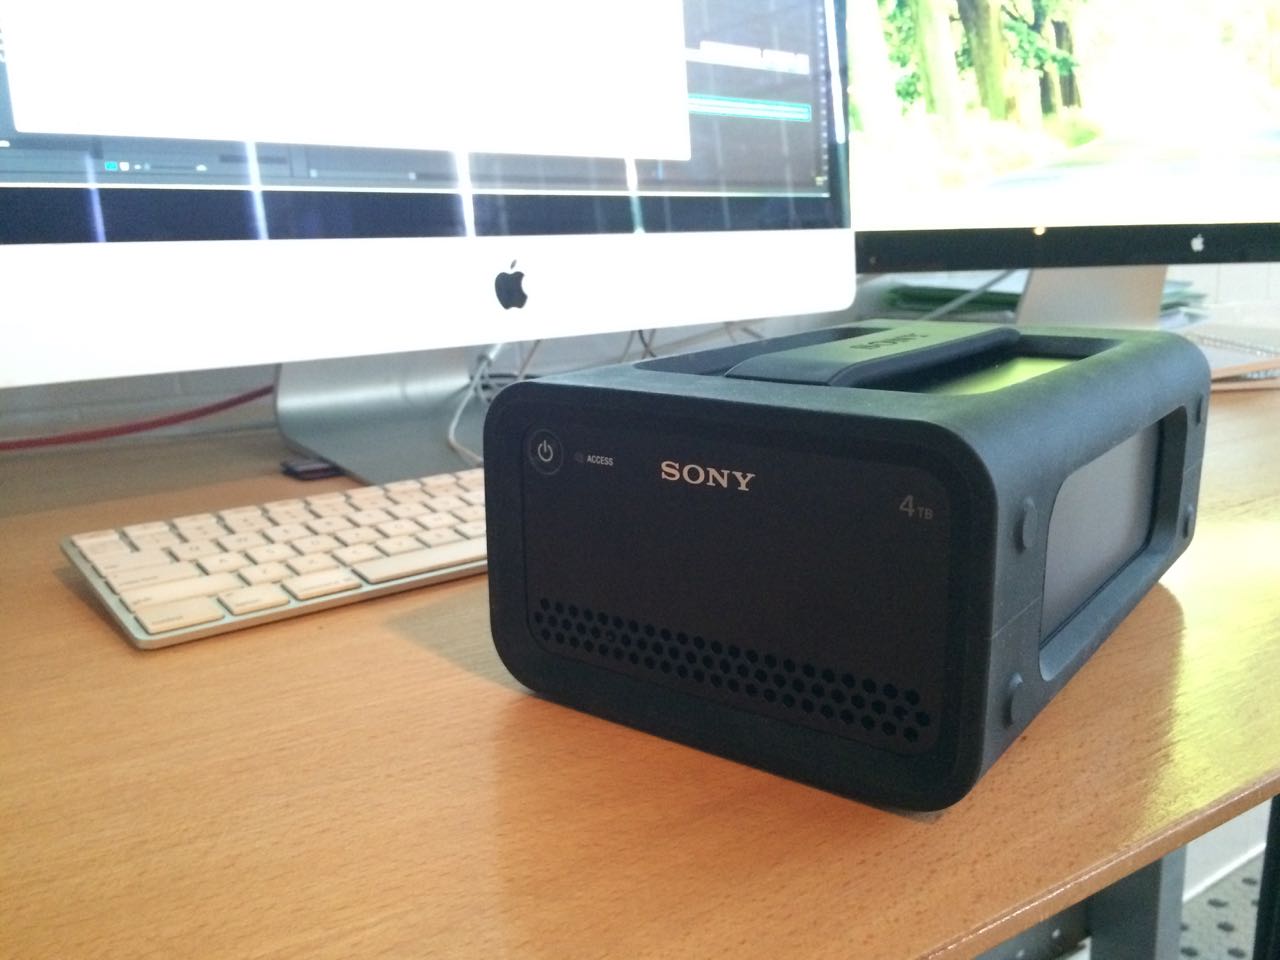 Review: Sony PSZ-RA4T hard drive - A very portable rugged RAID 10